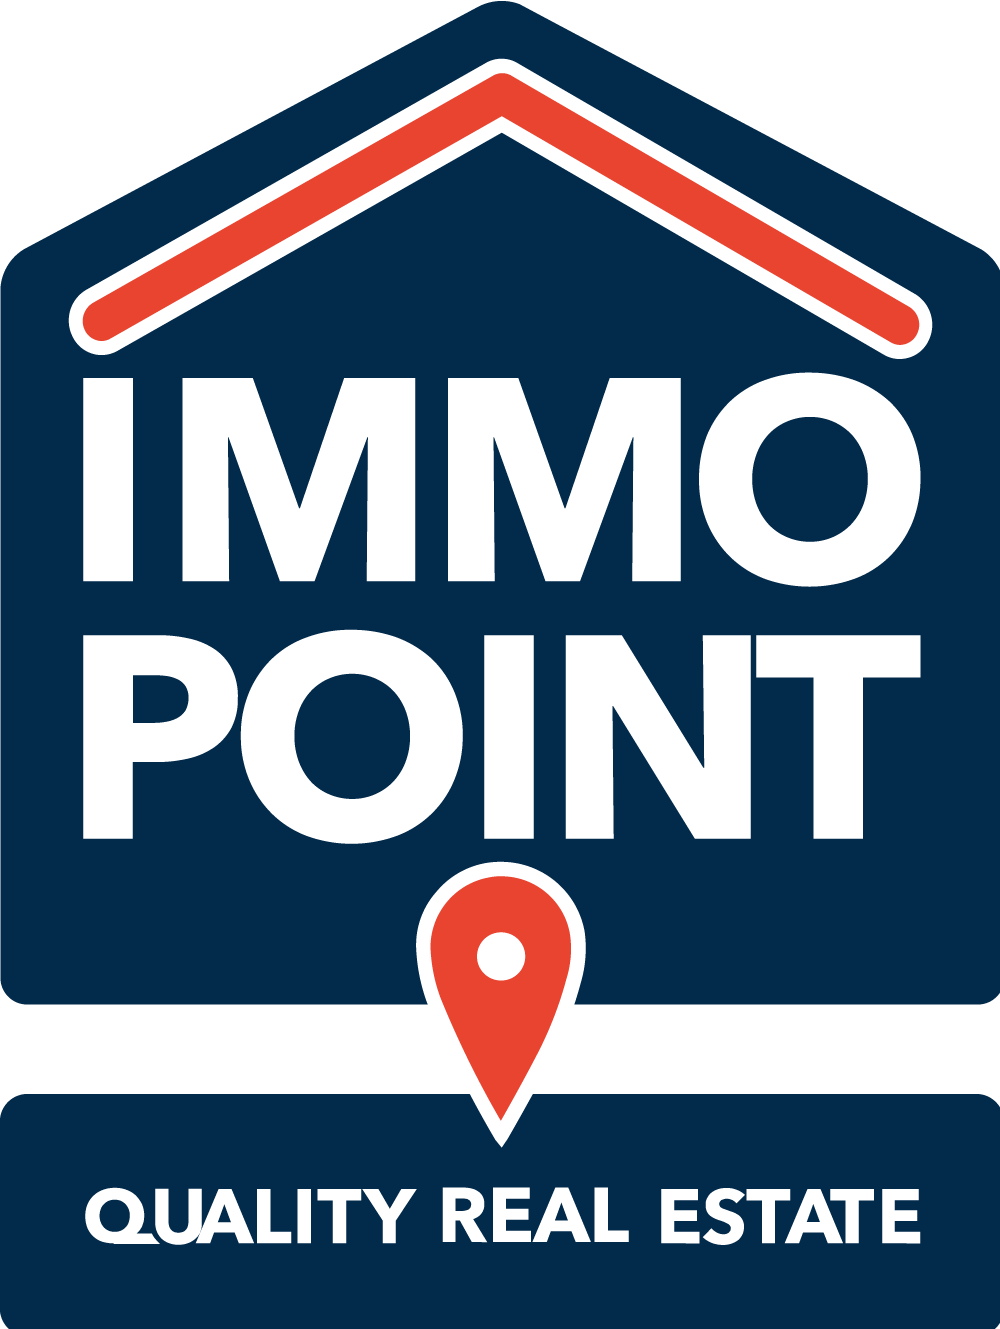 Immo Point logo